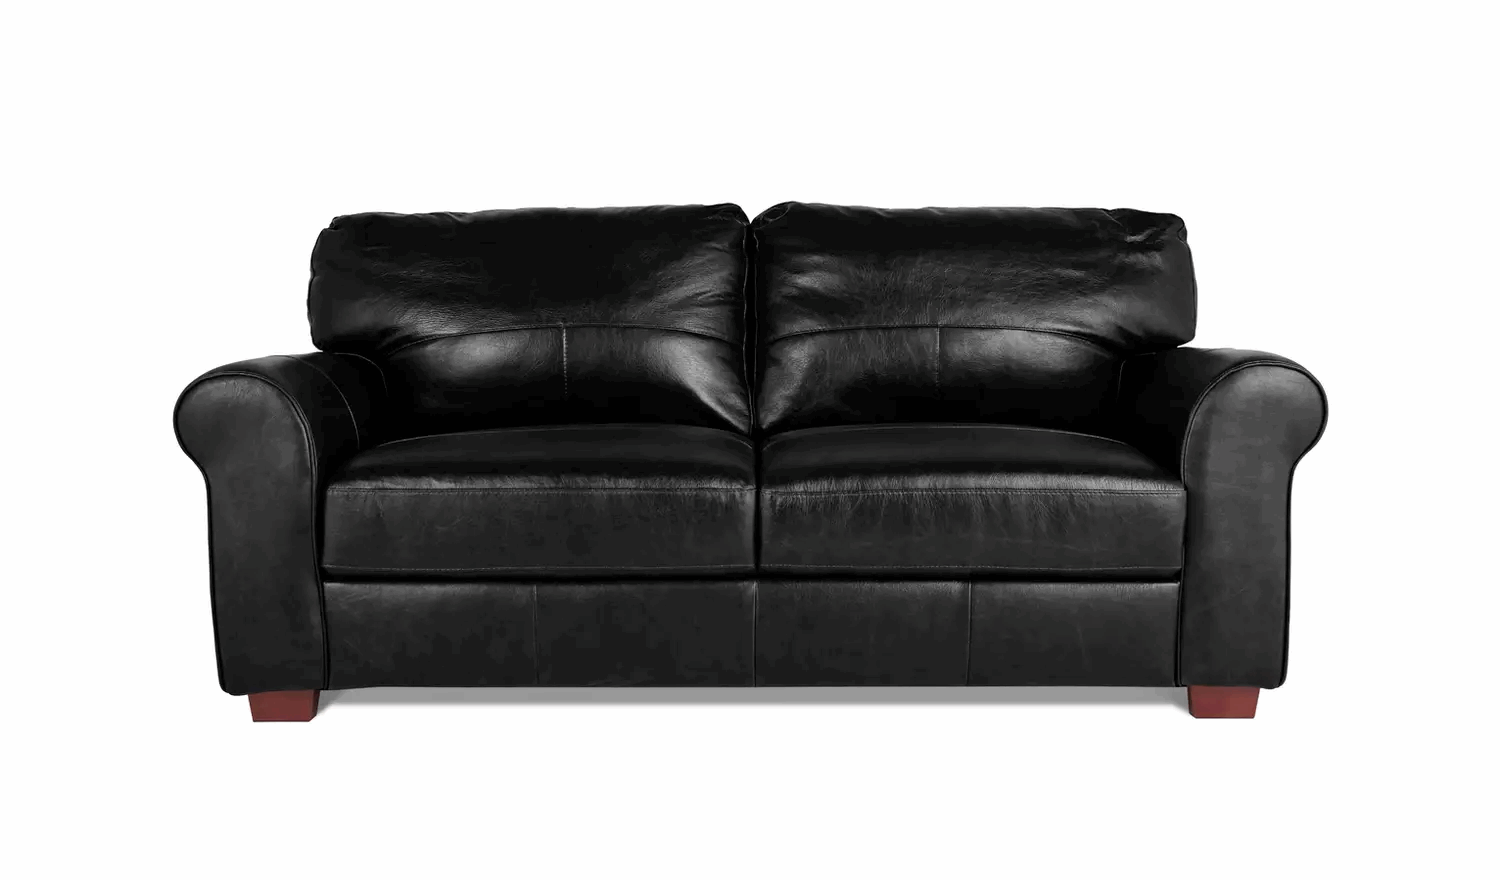 Habitat Salisbury 3 Seater Leather Sofa - Black (100% Leather)